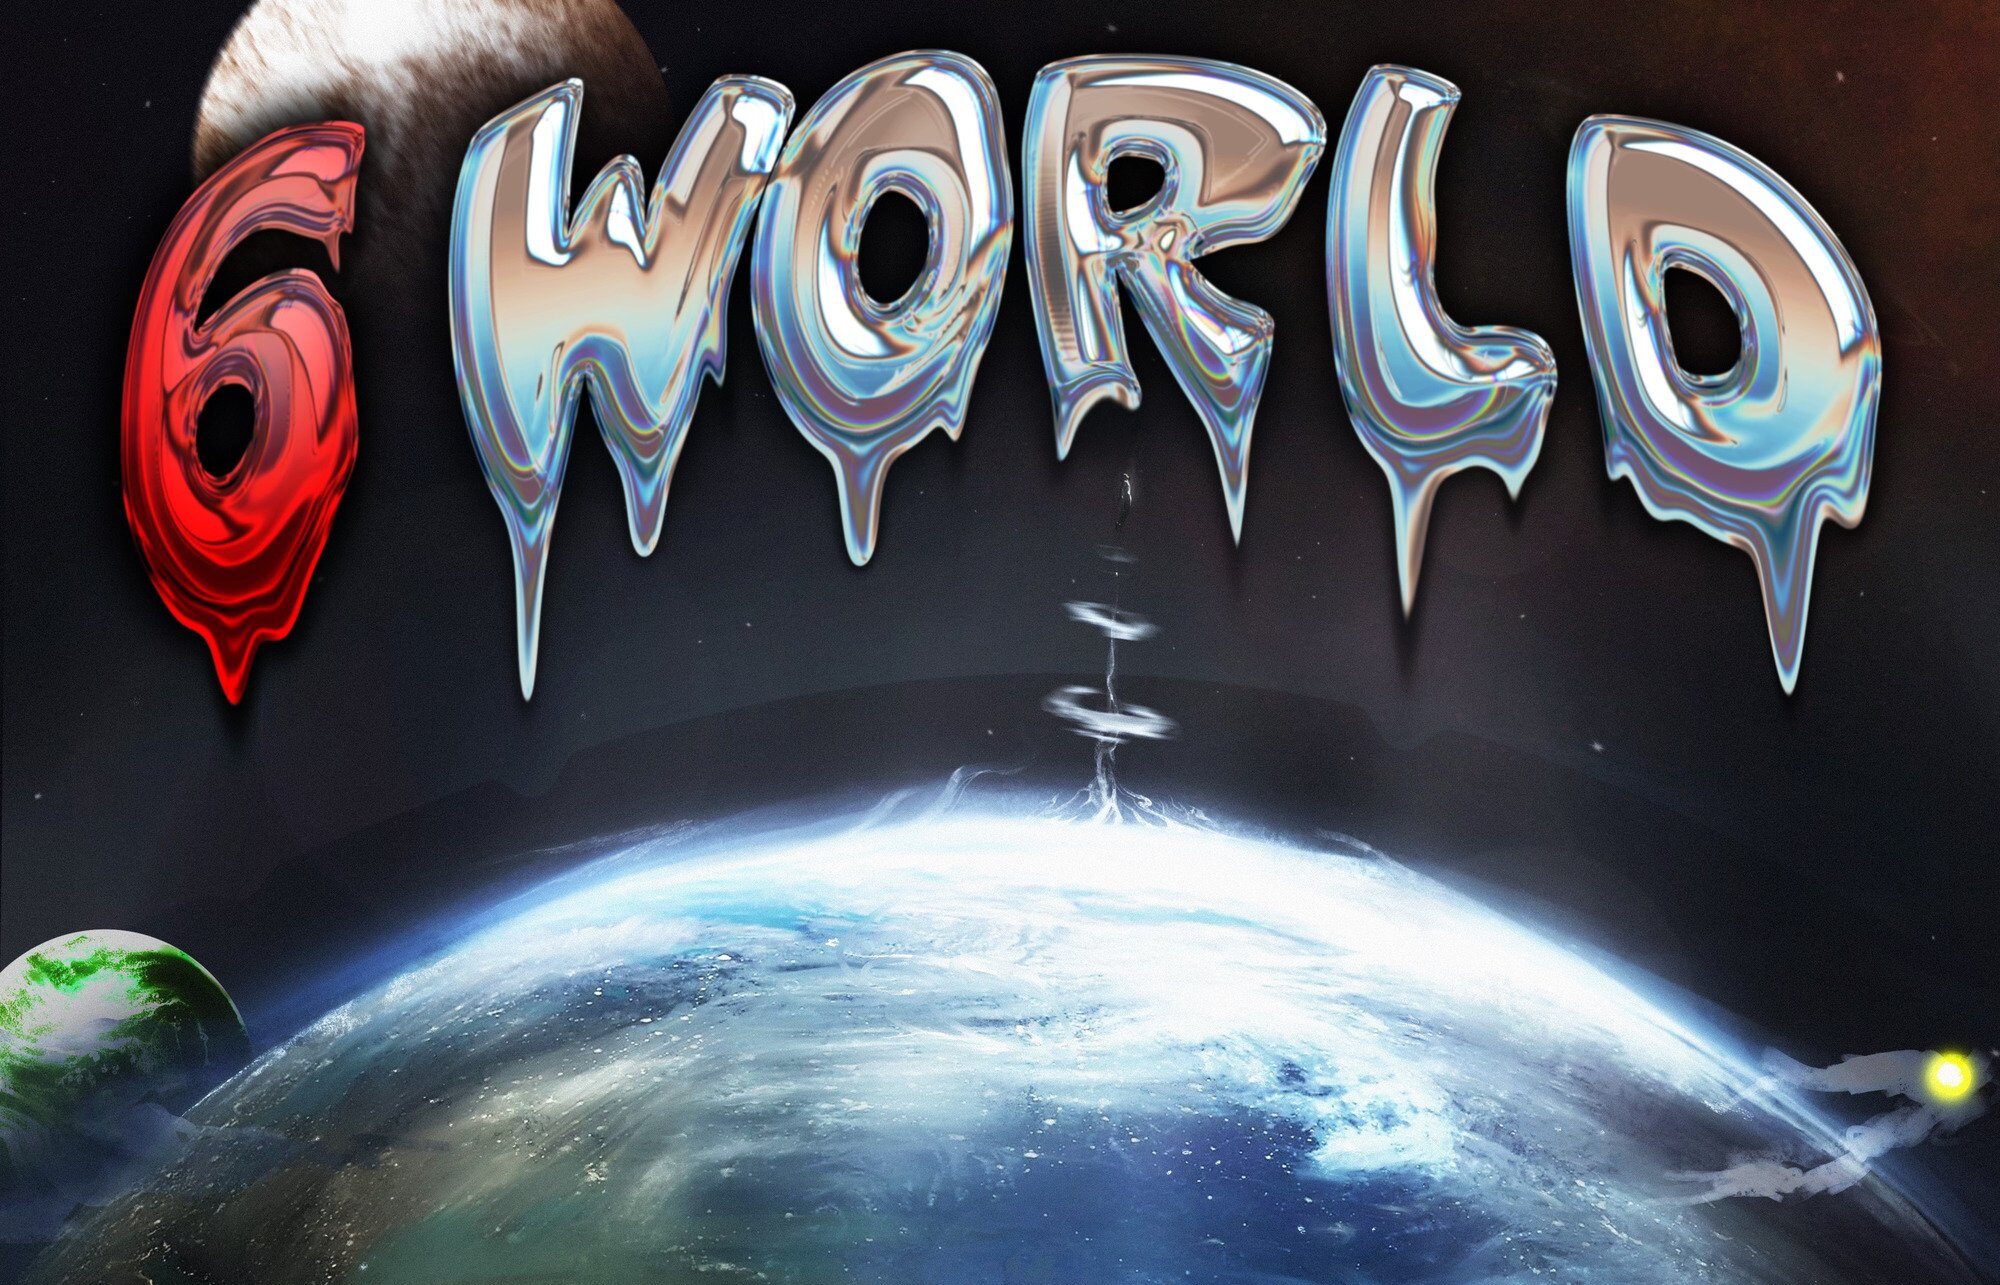 From Michael Jackson to "6 World": Swav6's Journey to Stardom